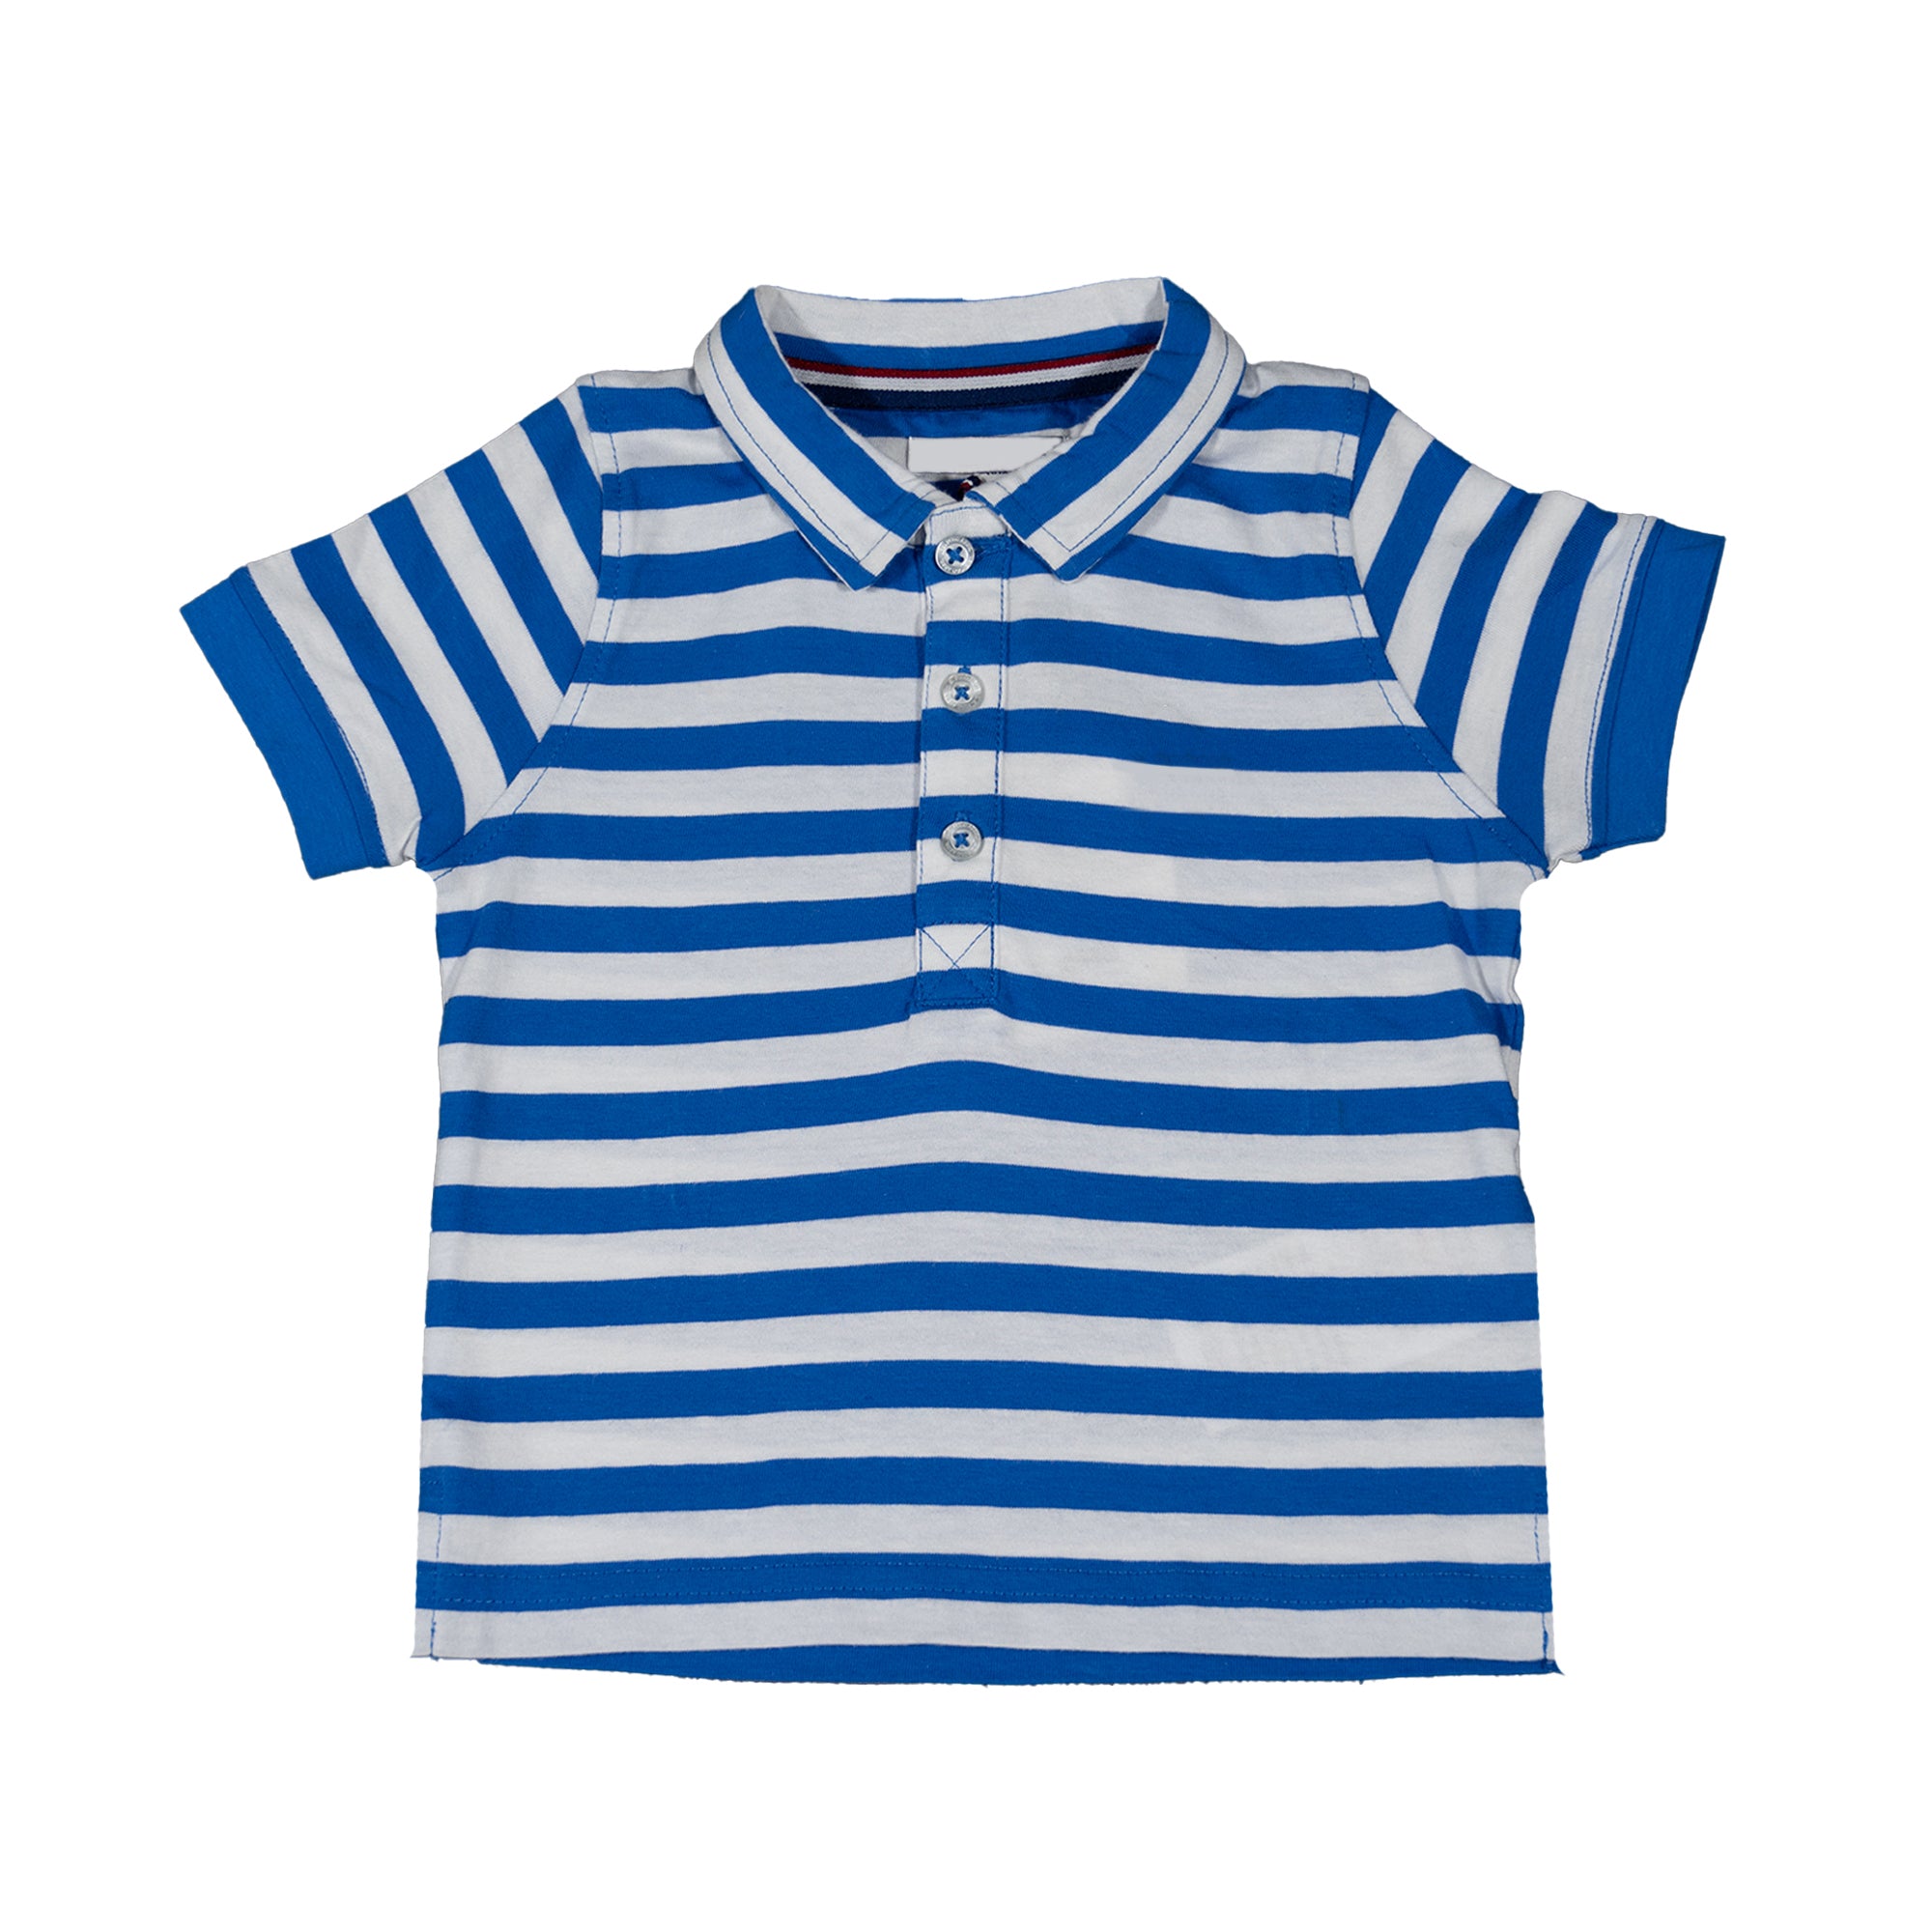 Boys polo t-shirt with short 2 piece set